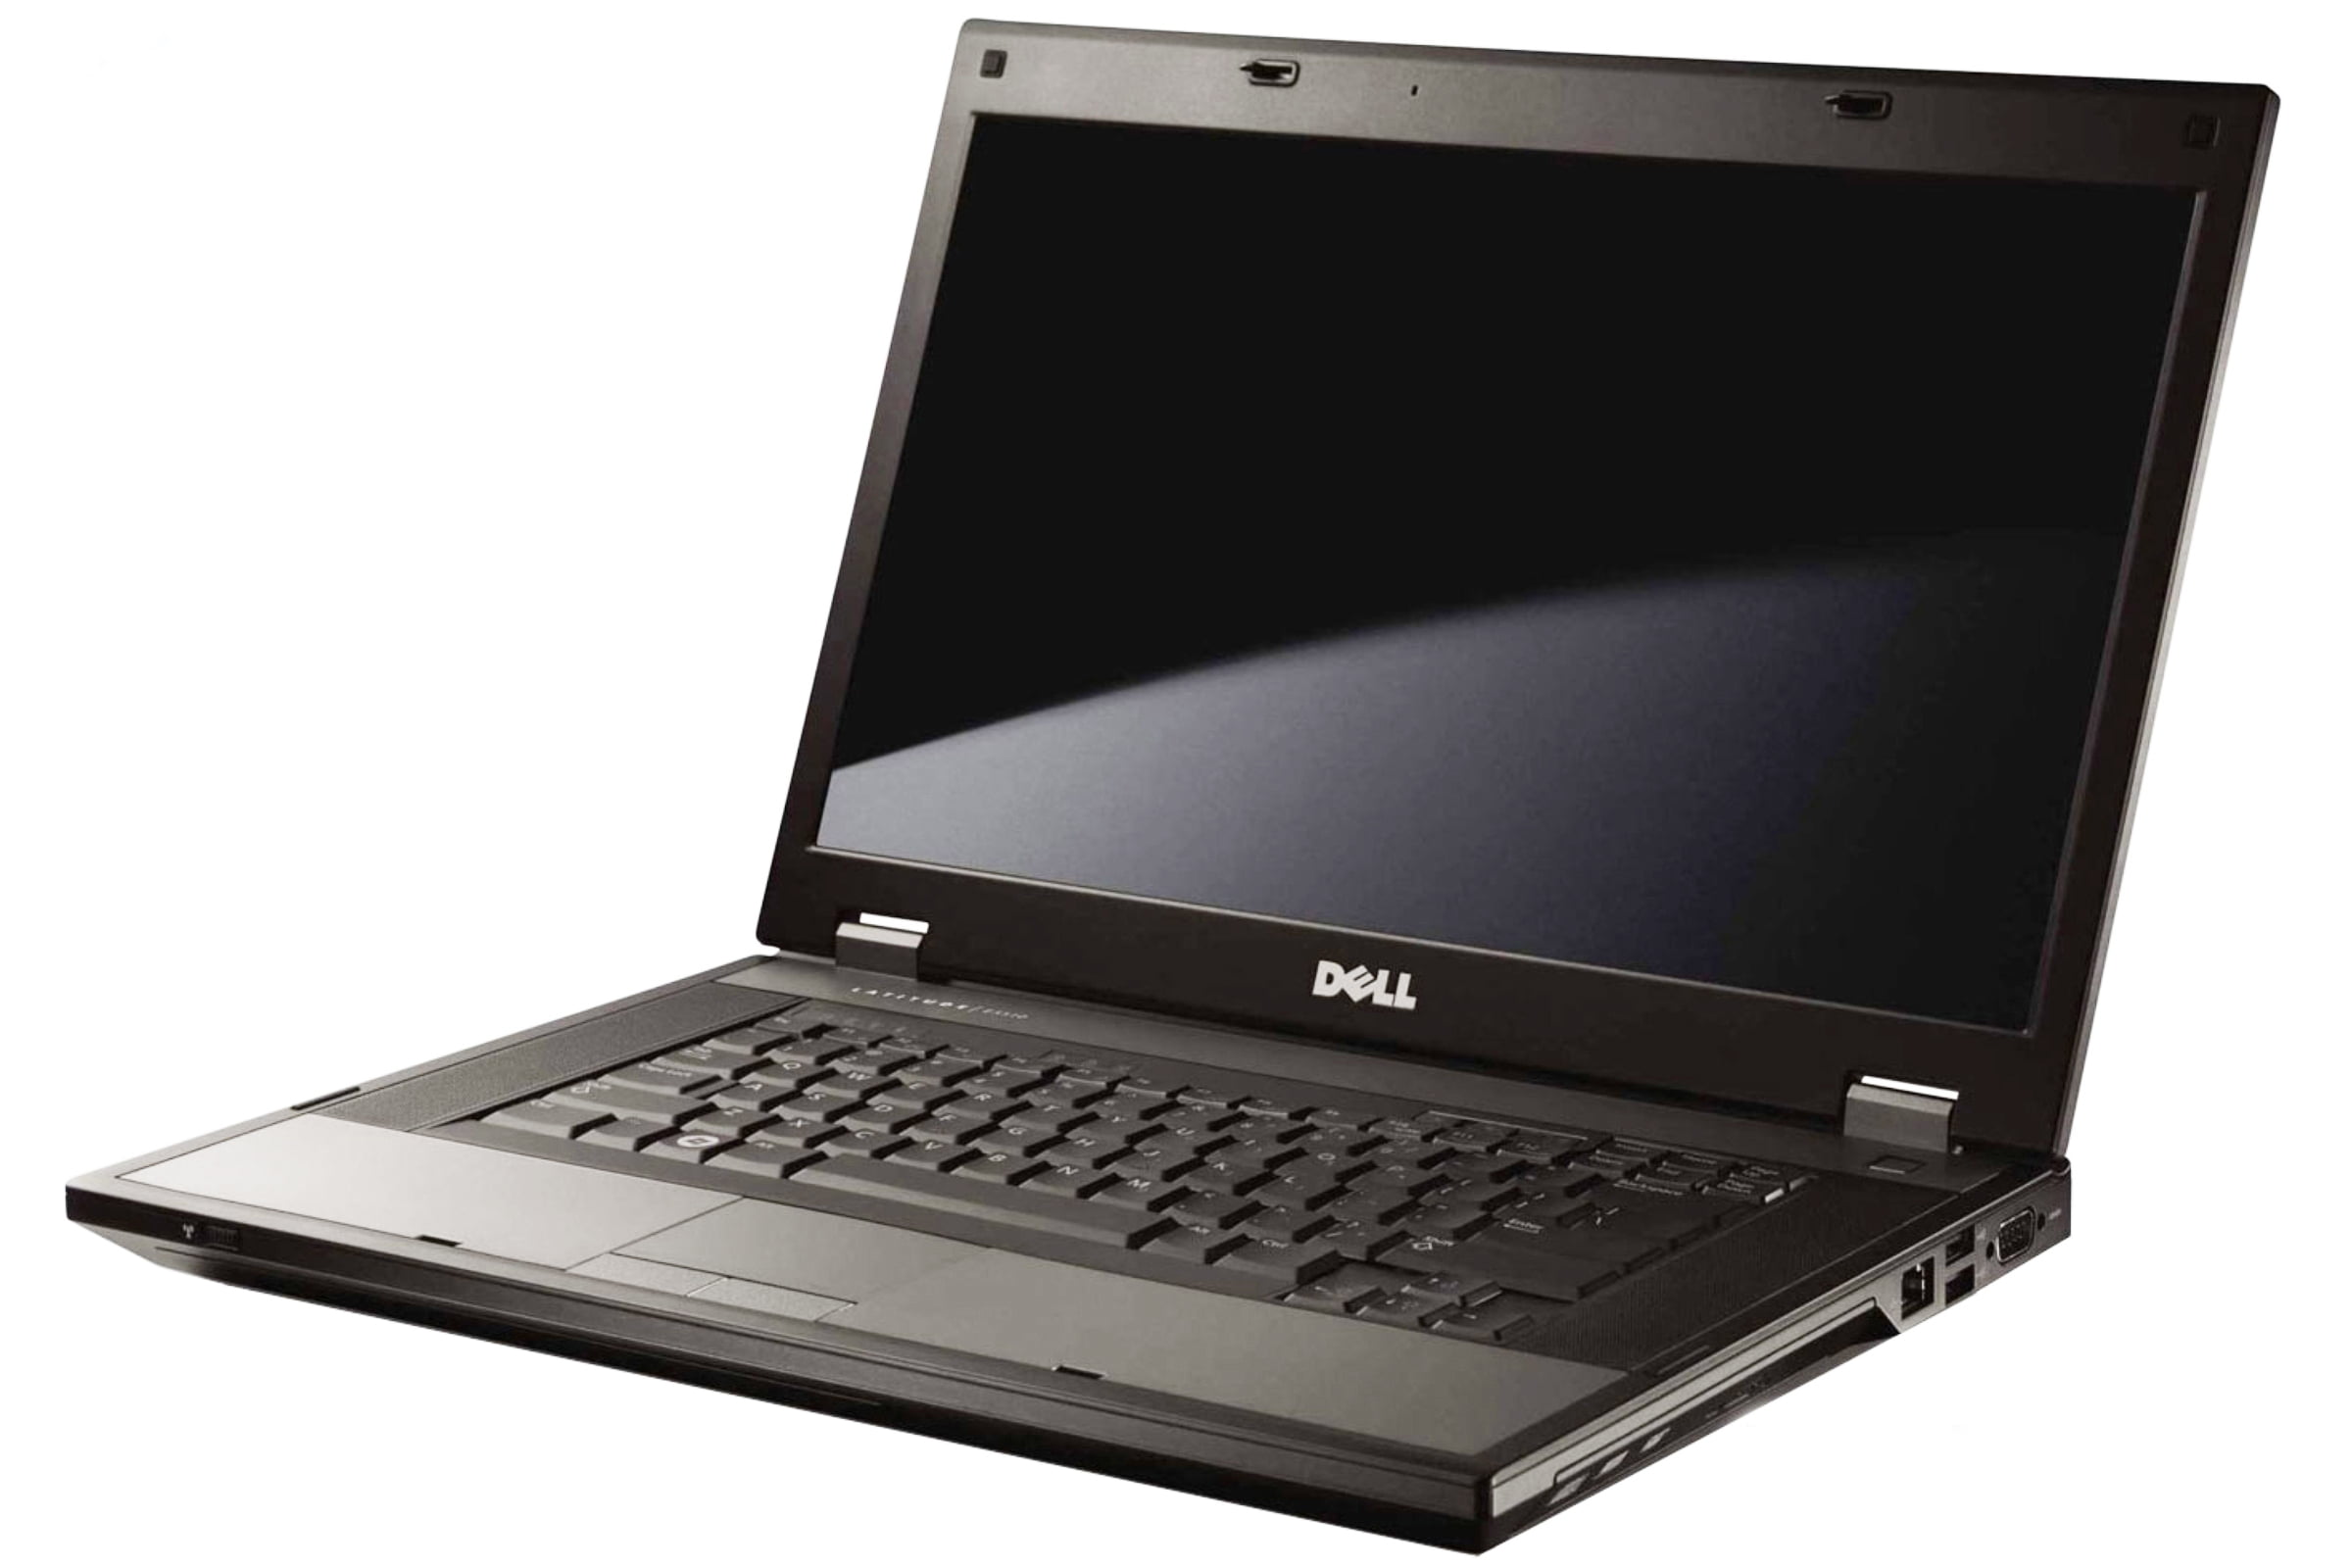 Refurbished Dell Latitude E5510 2 2ghz I3 2gb 160gb Dvd Windows 10 Pro 64 Laptop B Walmart Com Walmart Com